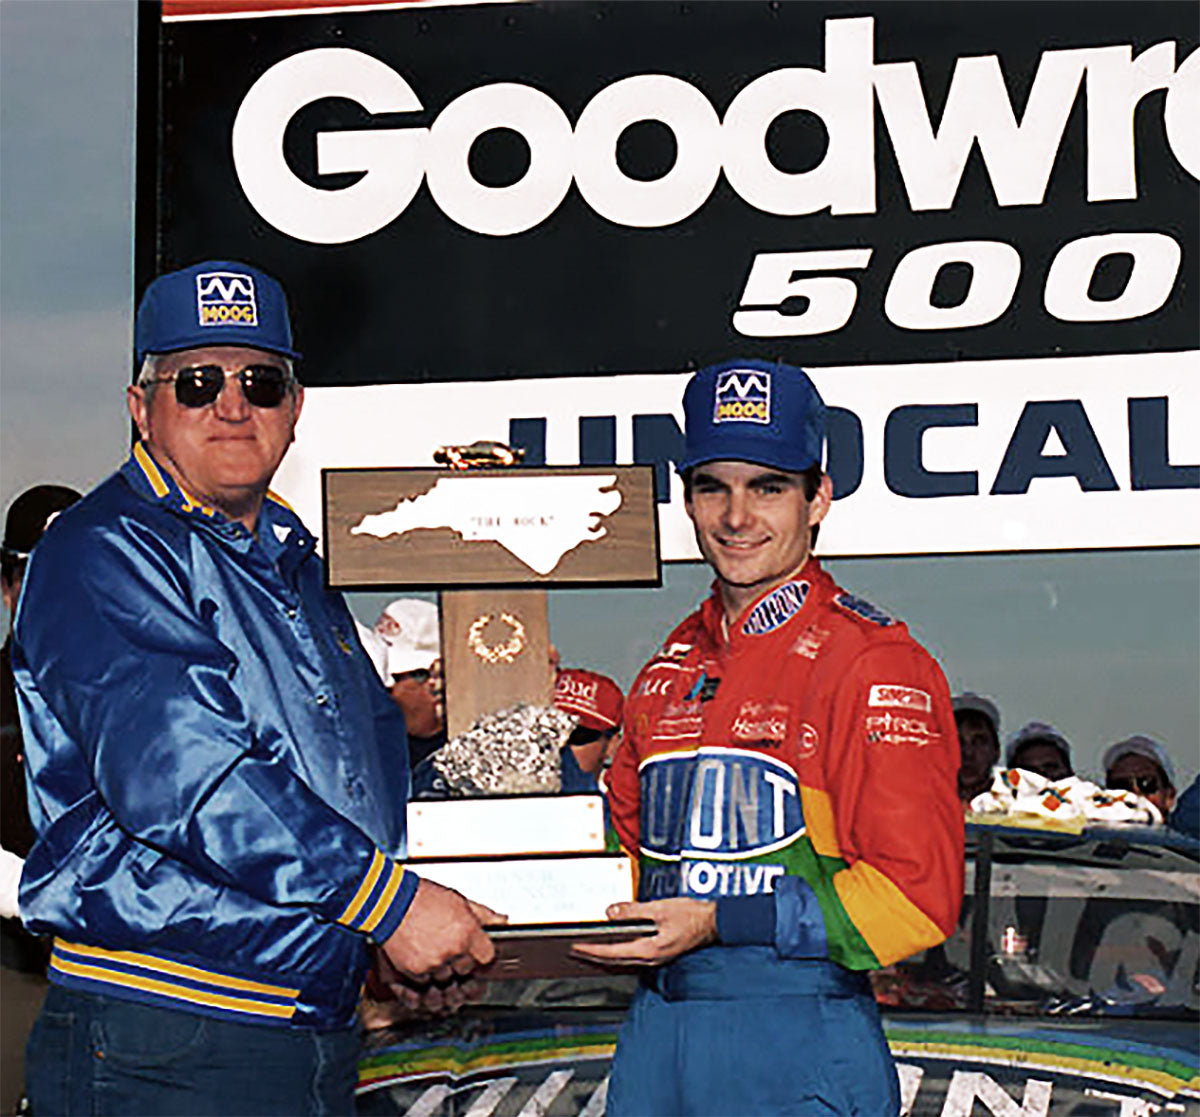 1995 Jeff Gordon North Carolina Goodwrench 500 Winning Trophy